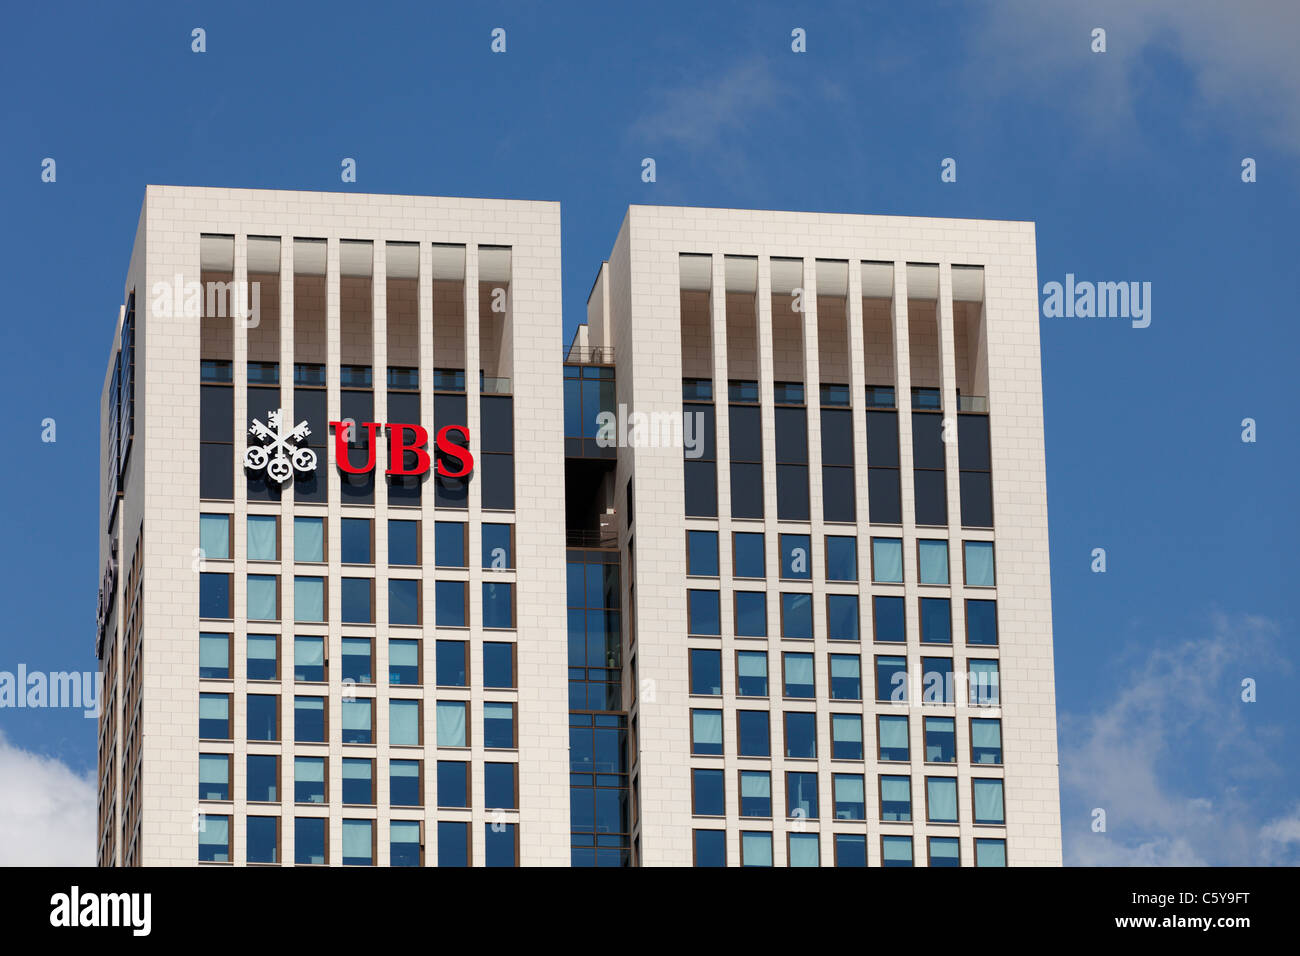 The UBS logo on the side of the OpernTurm skyscraper in Frankfurt, Germany. Stock Photo